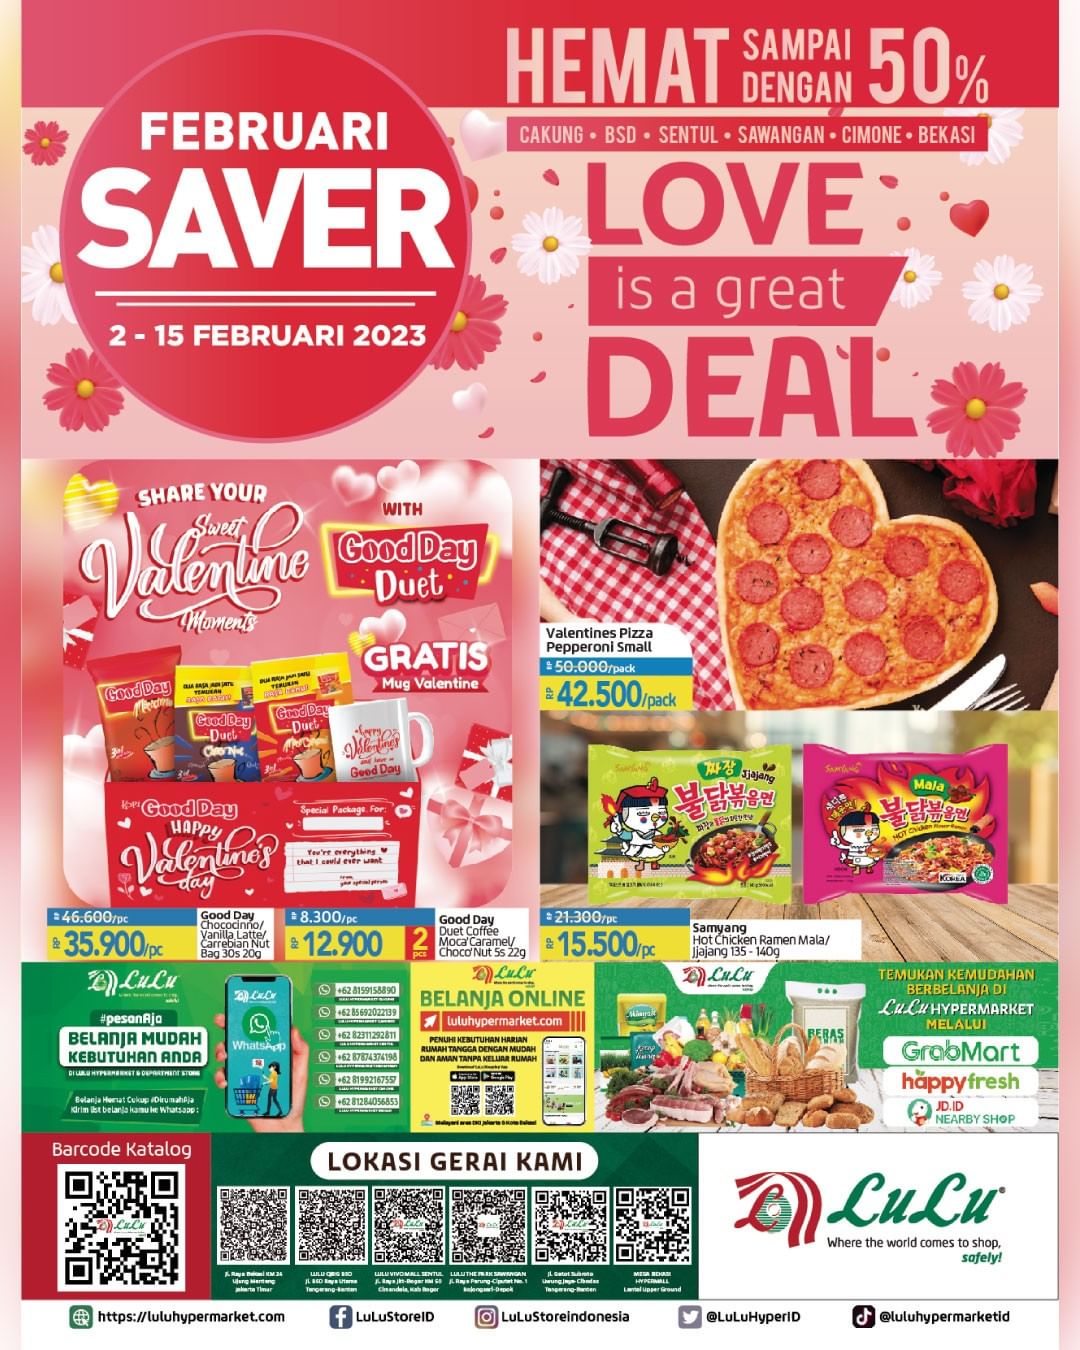 Katalog LuLu Hypermarket & Department Store FEBRUARI SAVERS! Belanja hemat HINGGA 50%